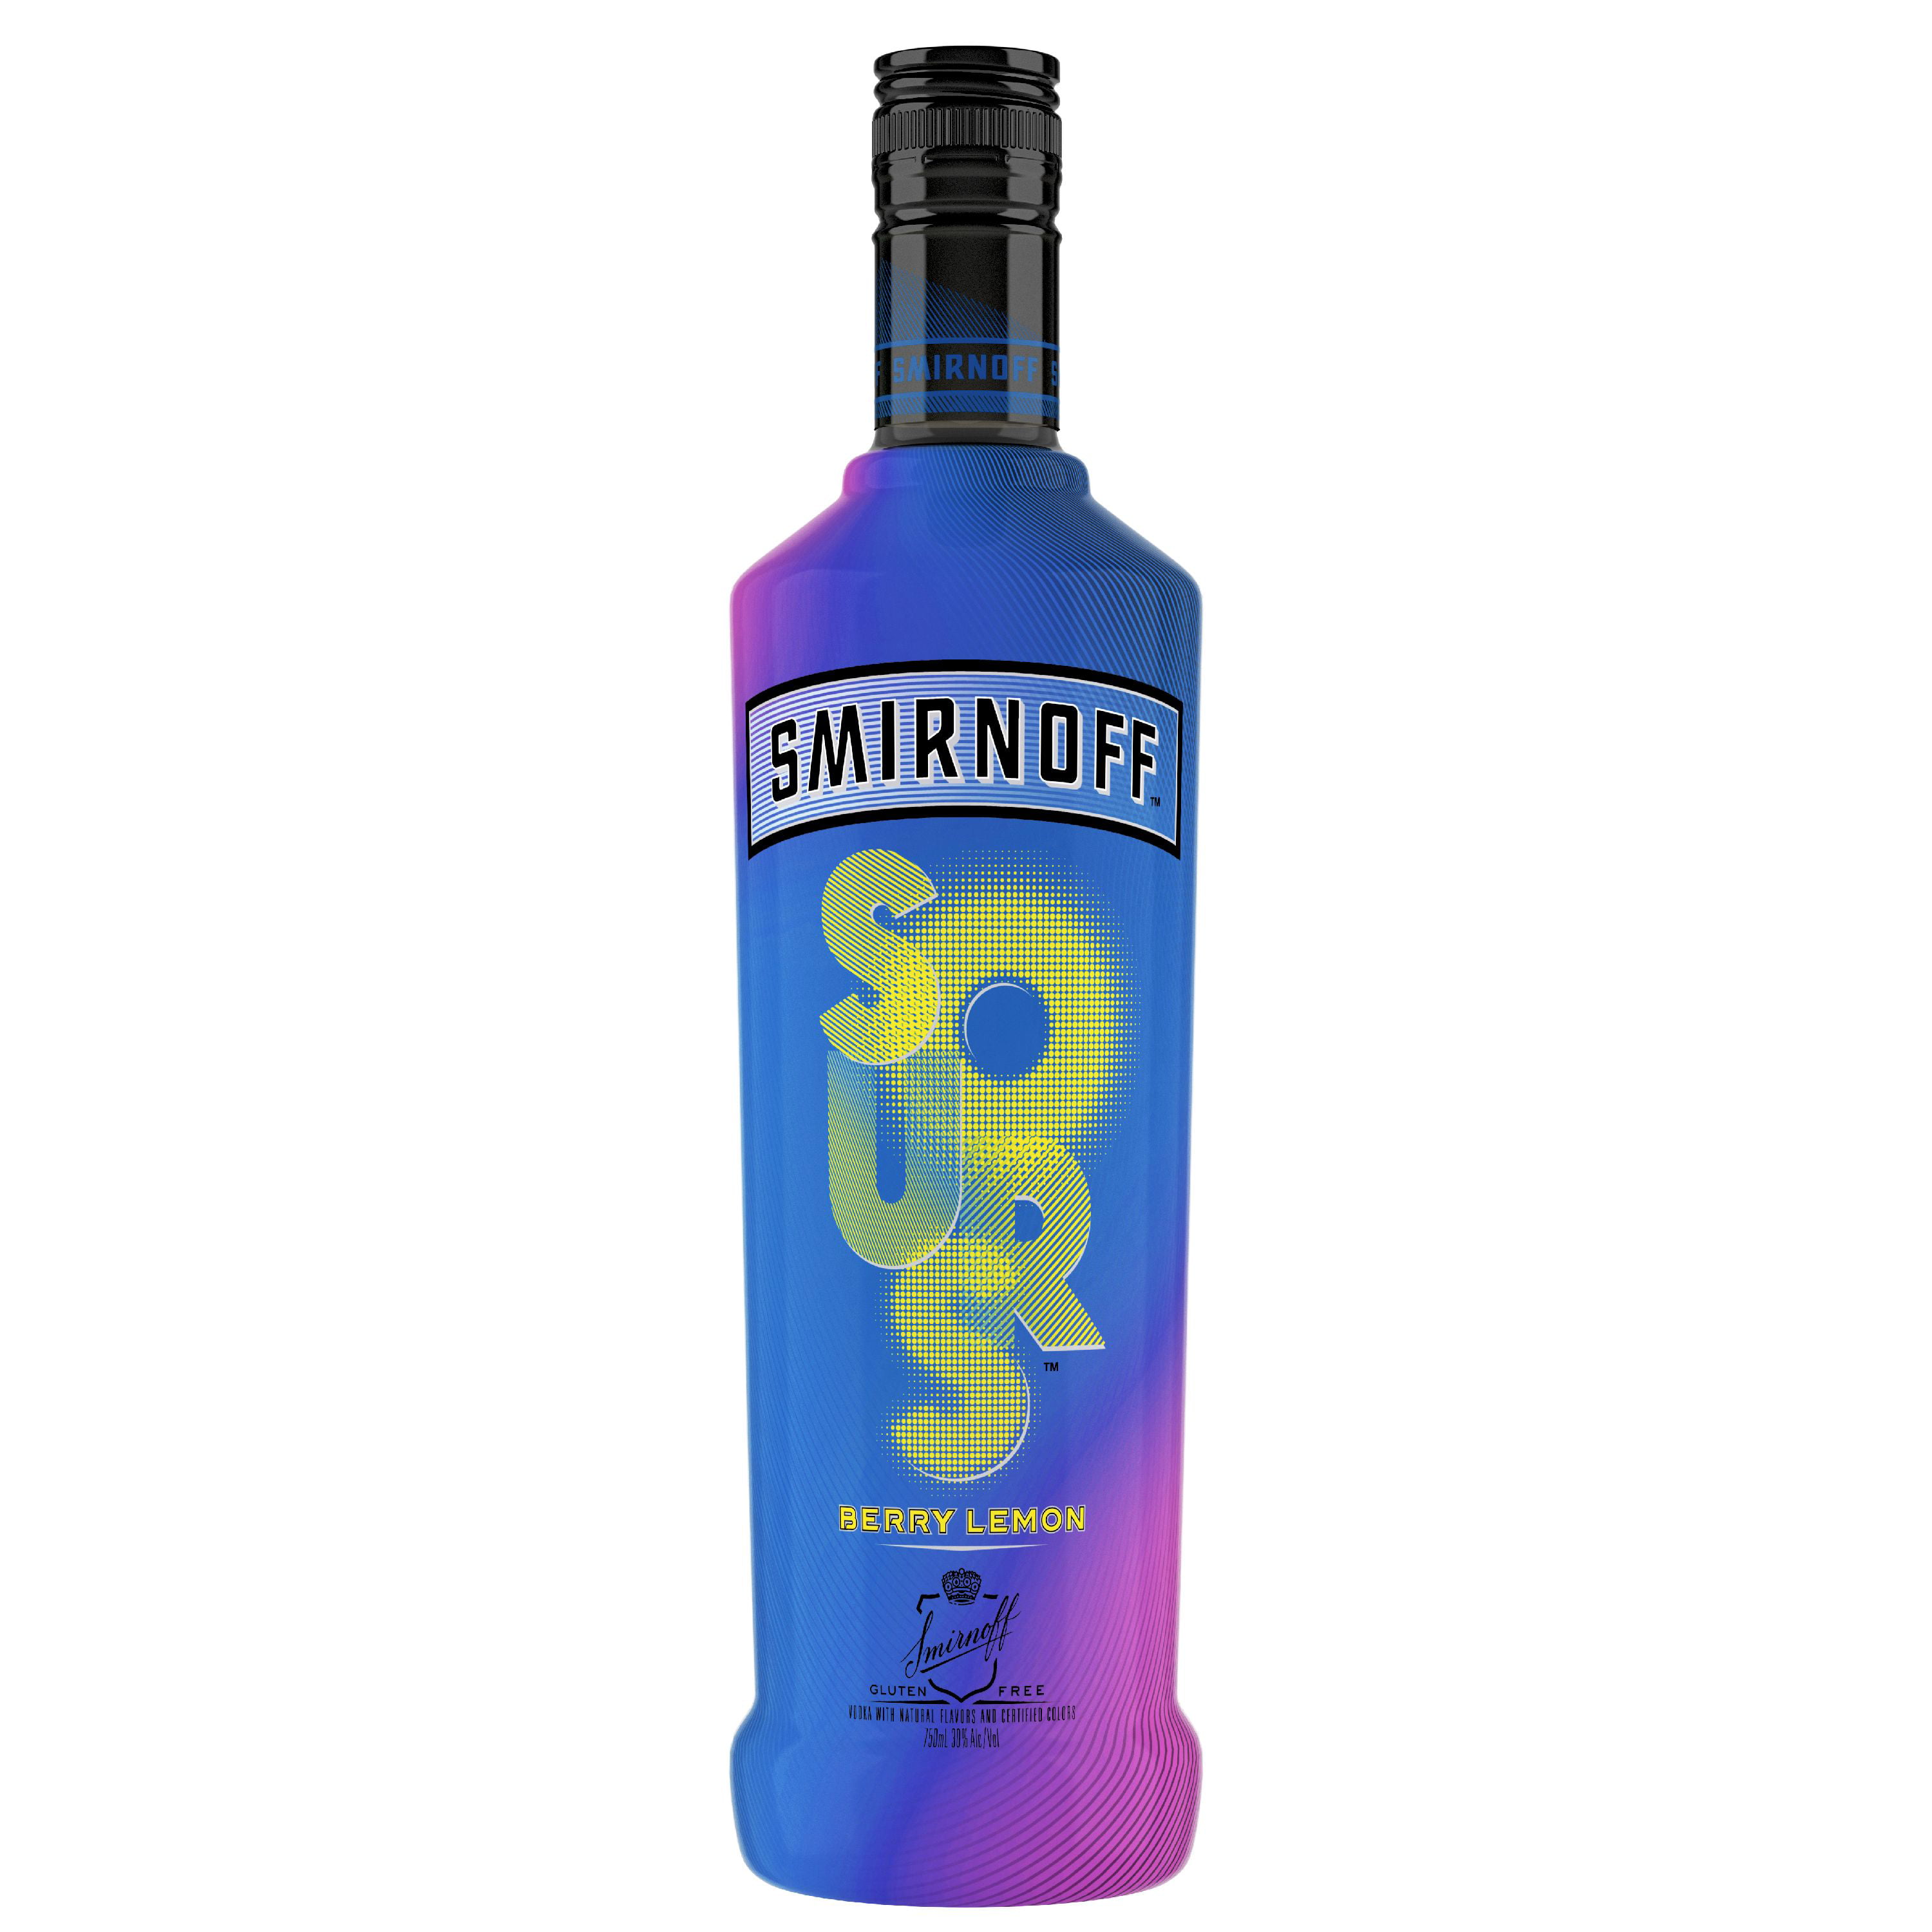 Smirnoff Sours Berry Lemon 60 Proof Vodka Infused With Natural Flavors 750 Ml Bottle Walmart Com Walmart Com